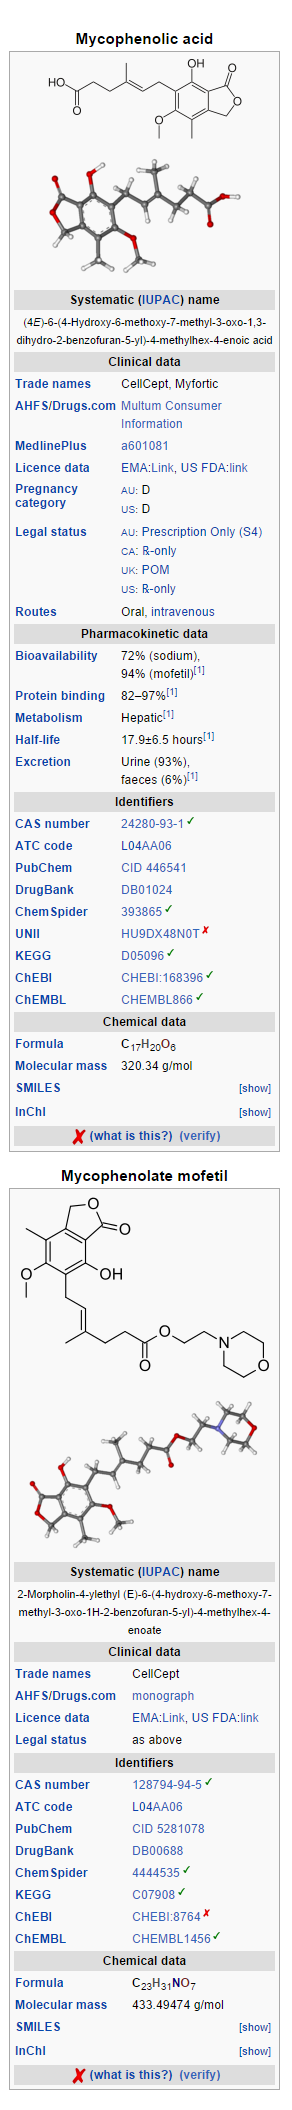 File:Mycophenolic acid.png